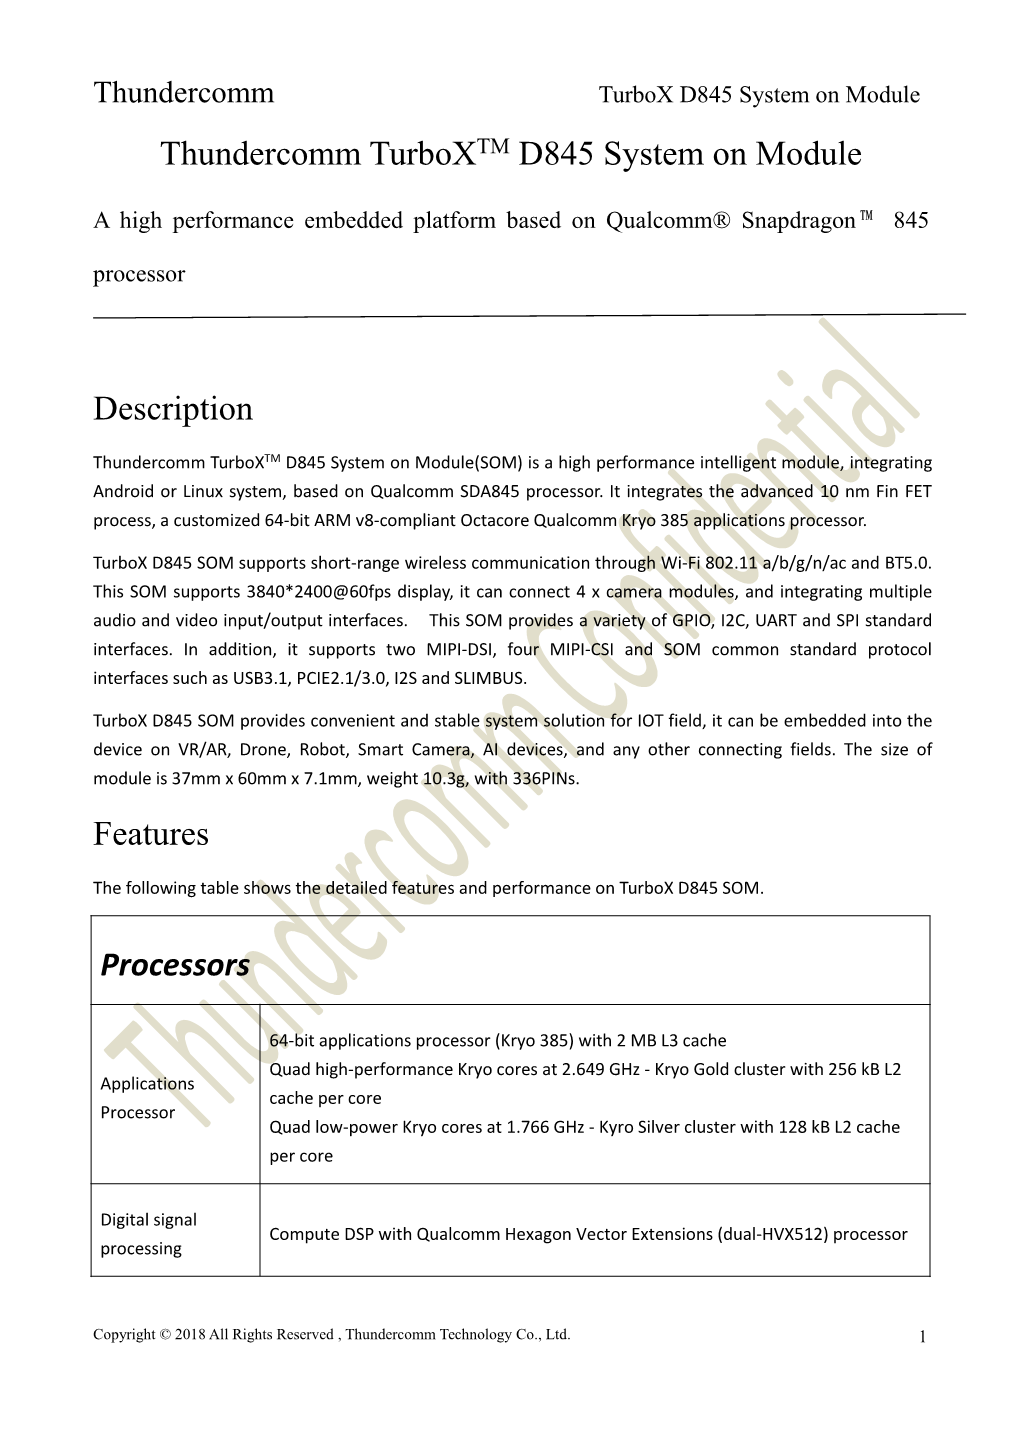 Thundersoft Turbox® D845 SOM Datasheet